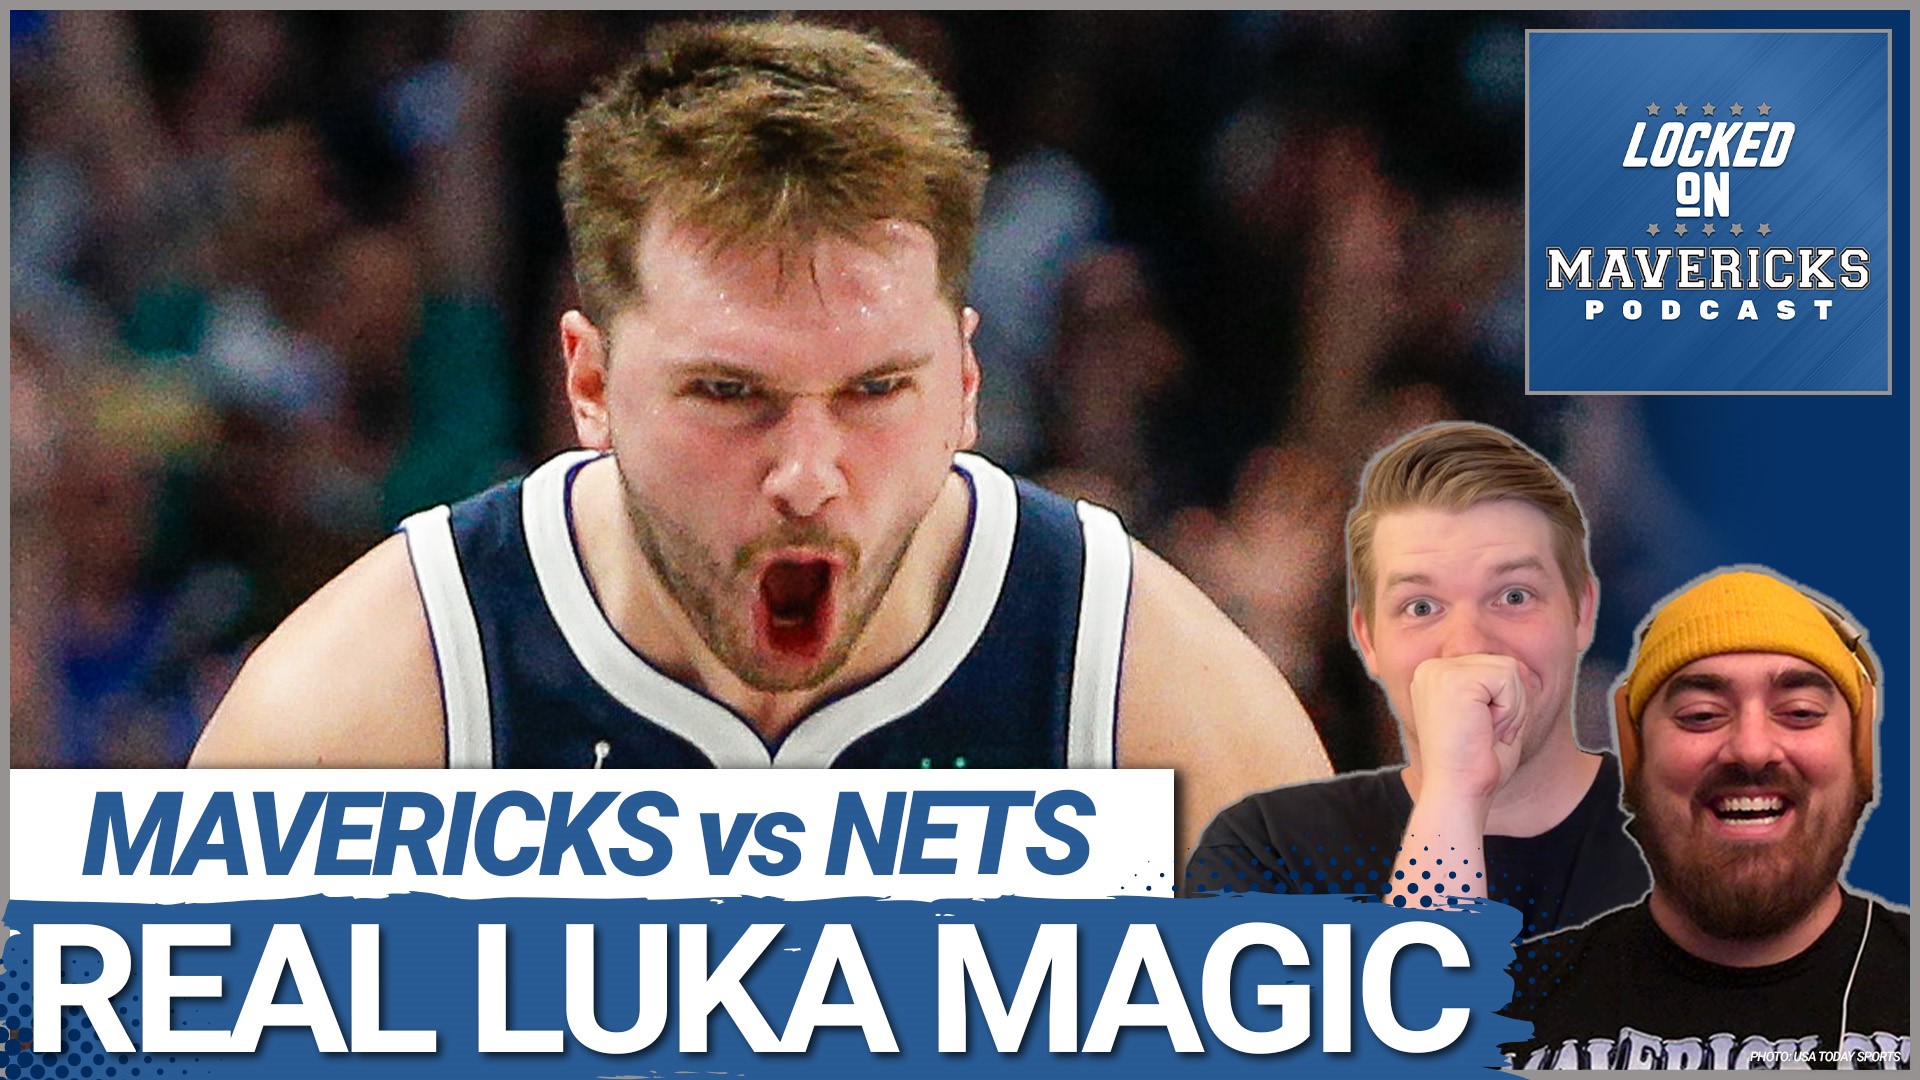 Nick Angstadt & Isaac Harris breakdown the Dallas Mavericks vs Brooklyn Nets game and Luka Doncic using actual magic on his game-winning shot.